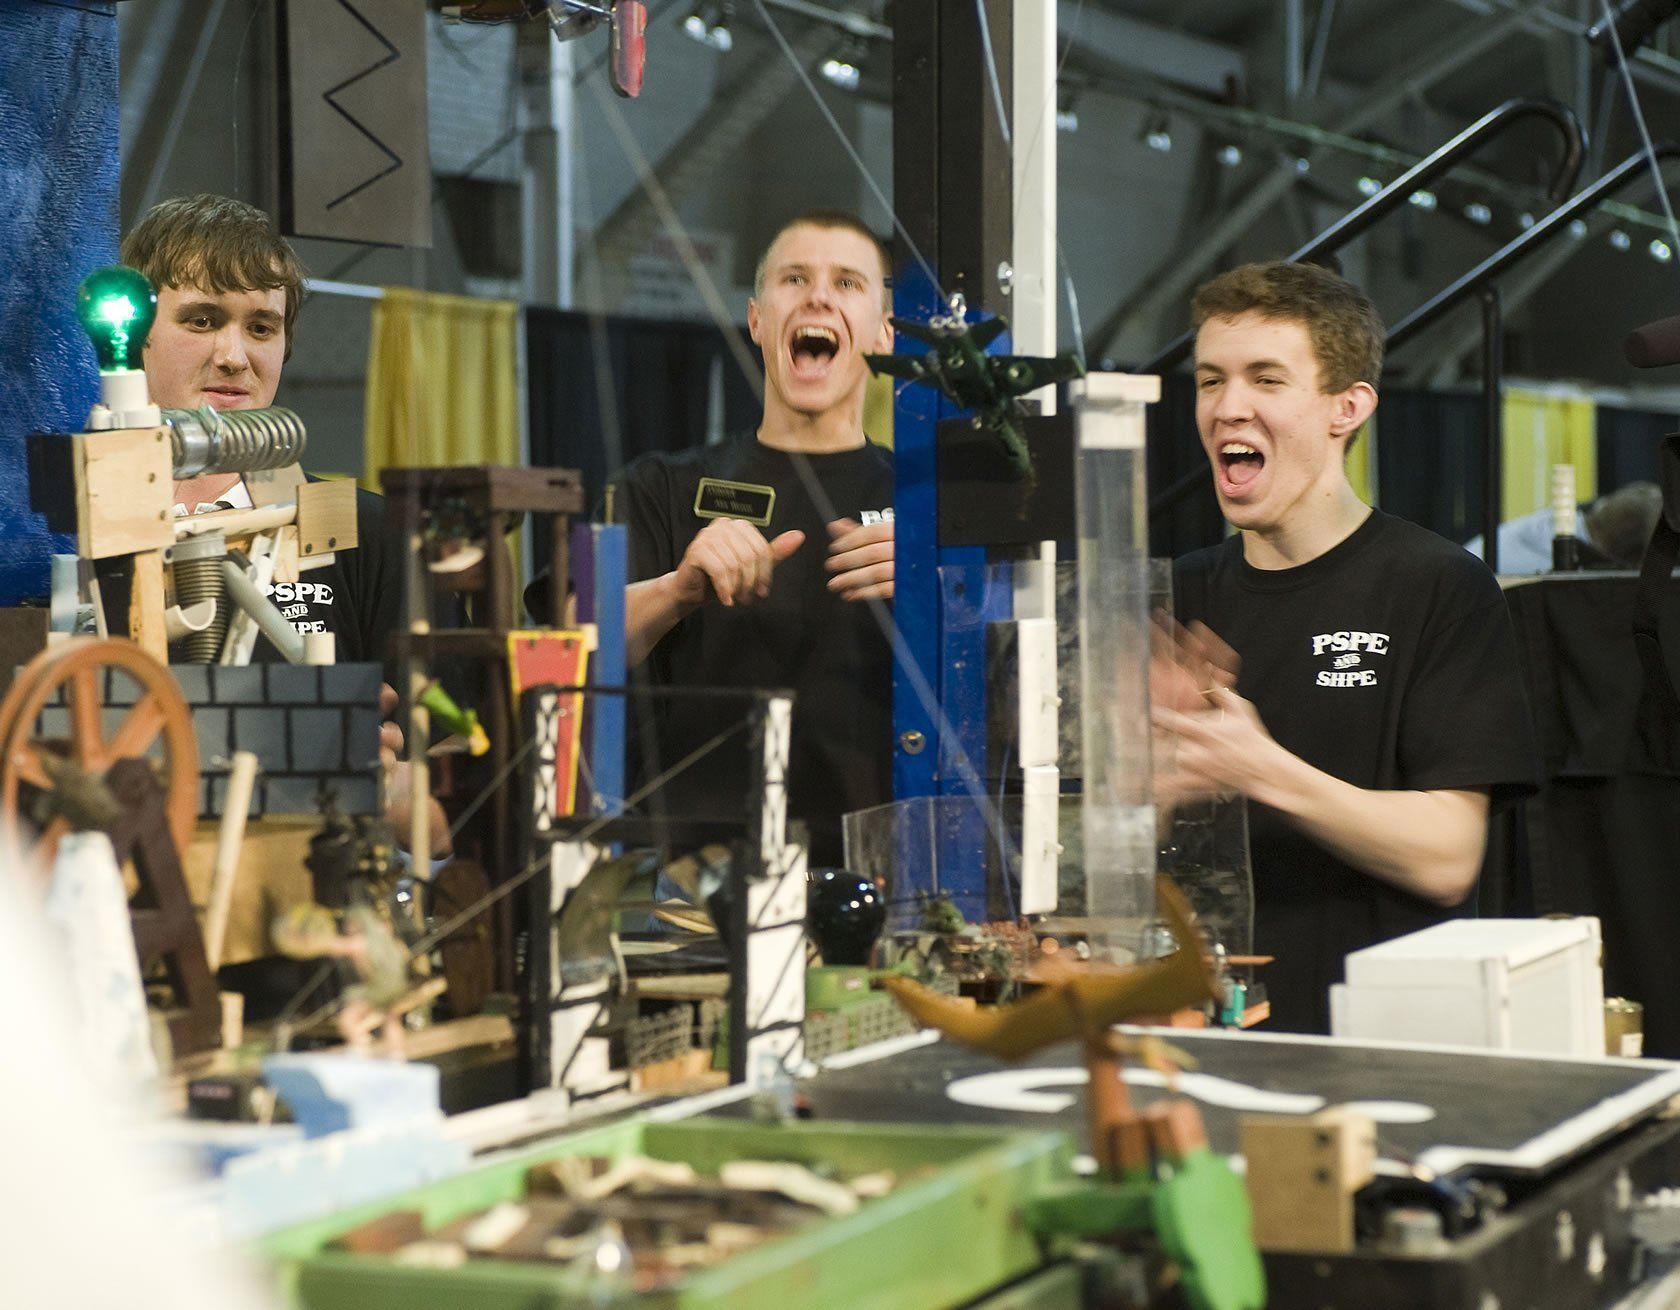 Largest Rube Goldberg Machine: PSPE set new world record